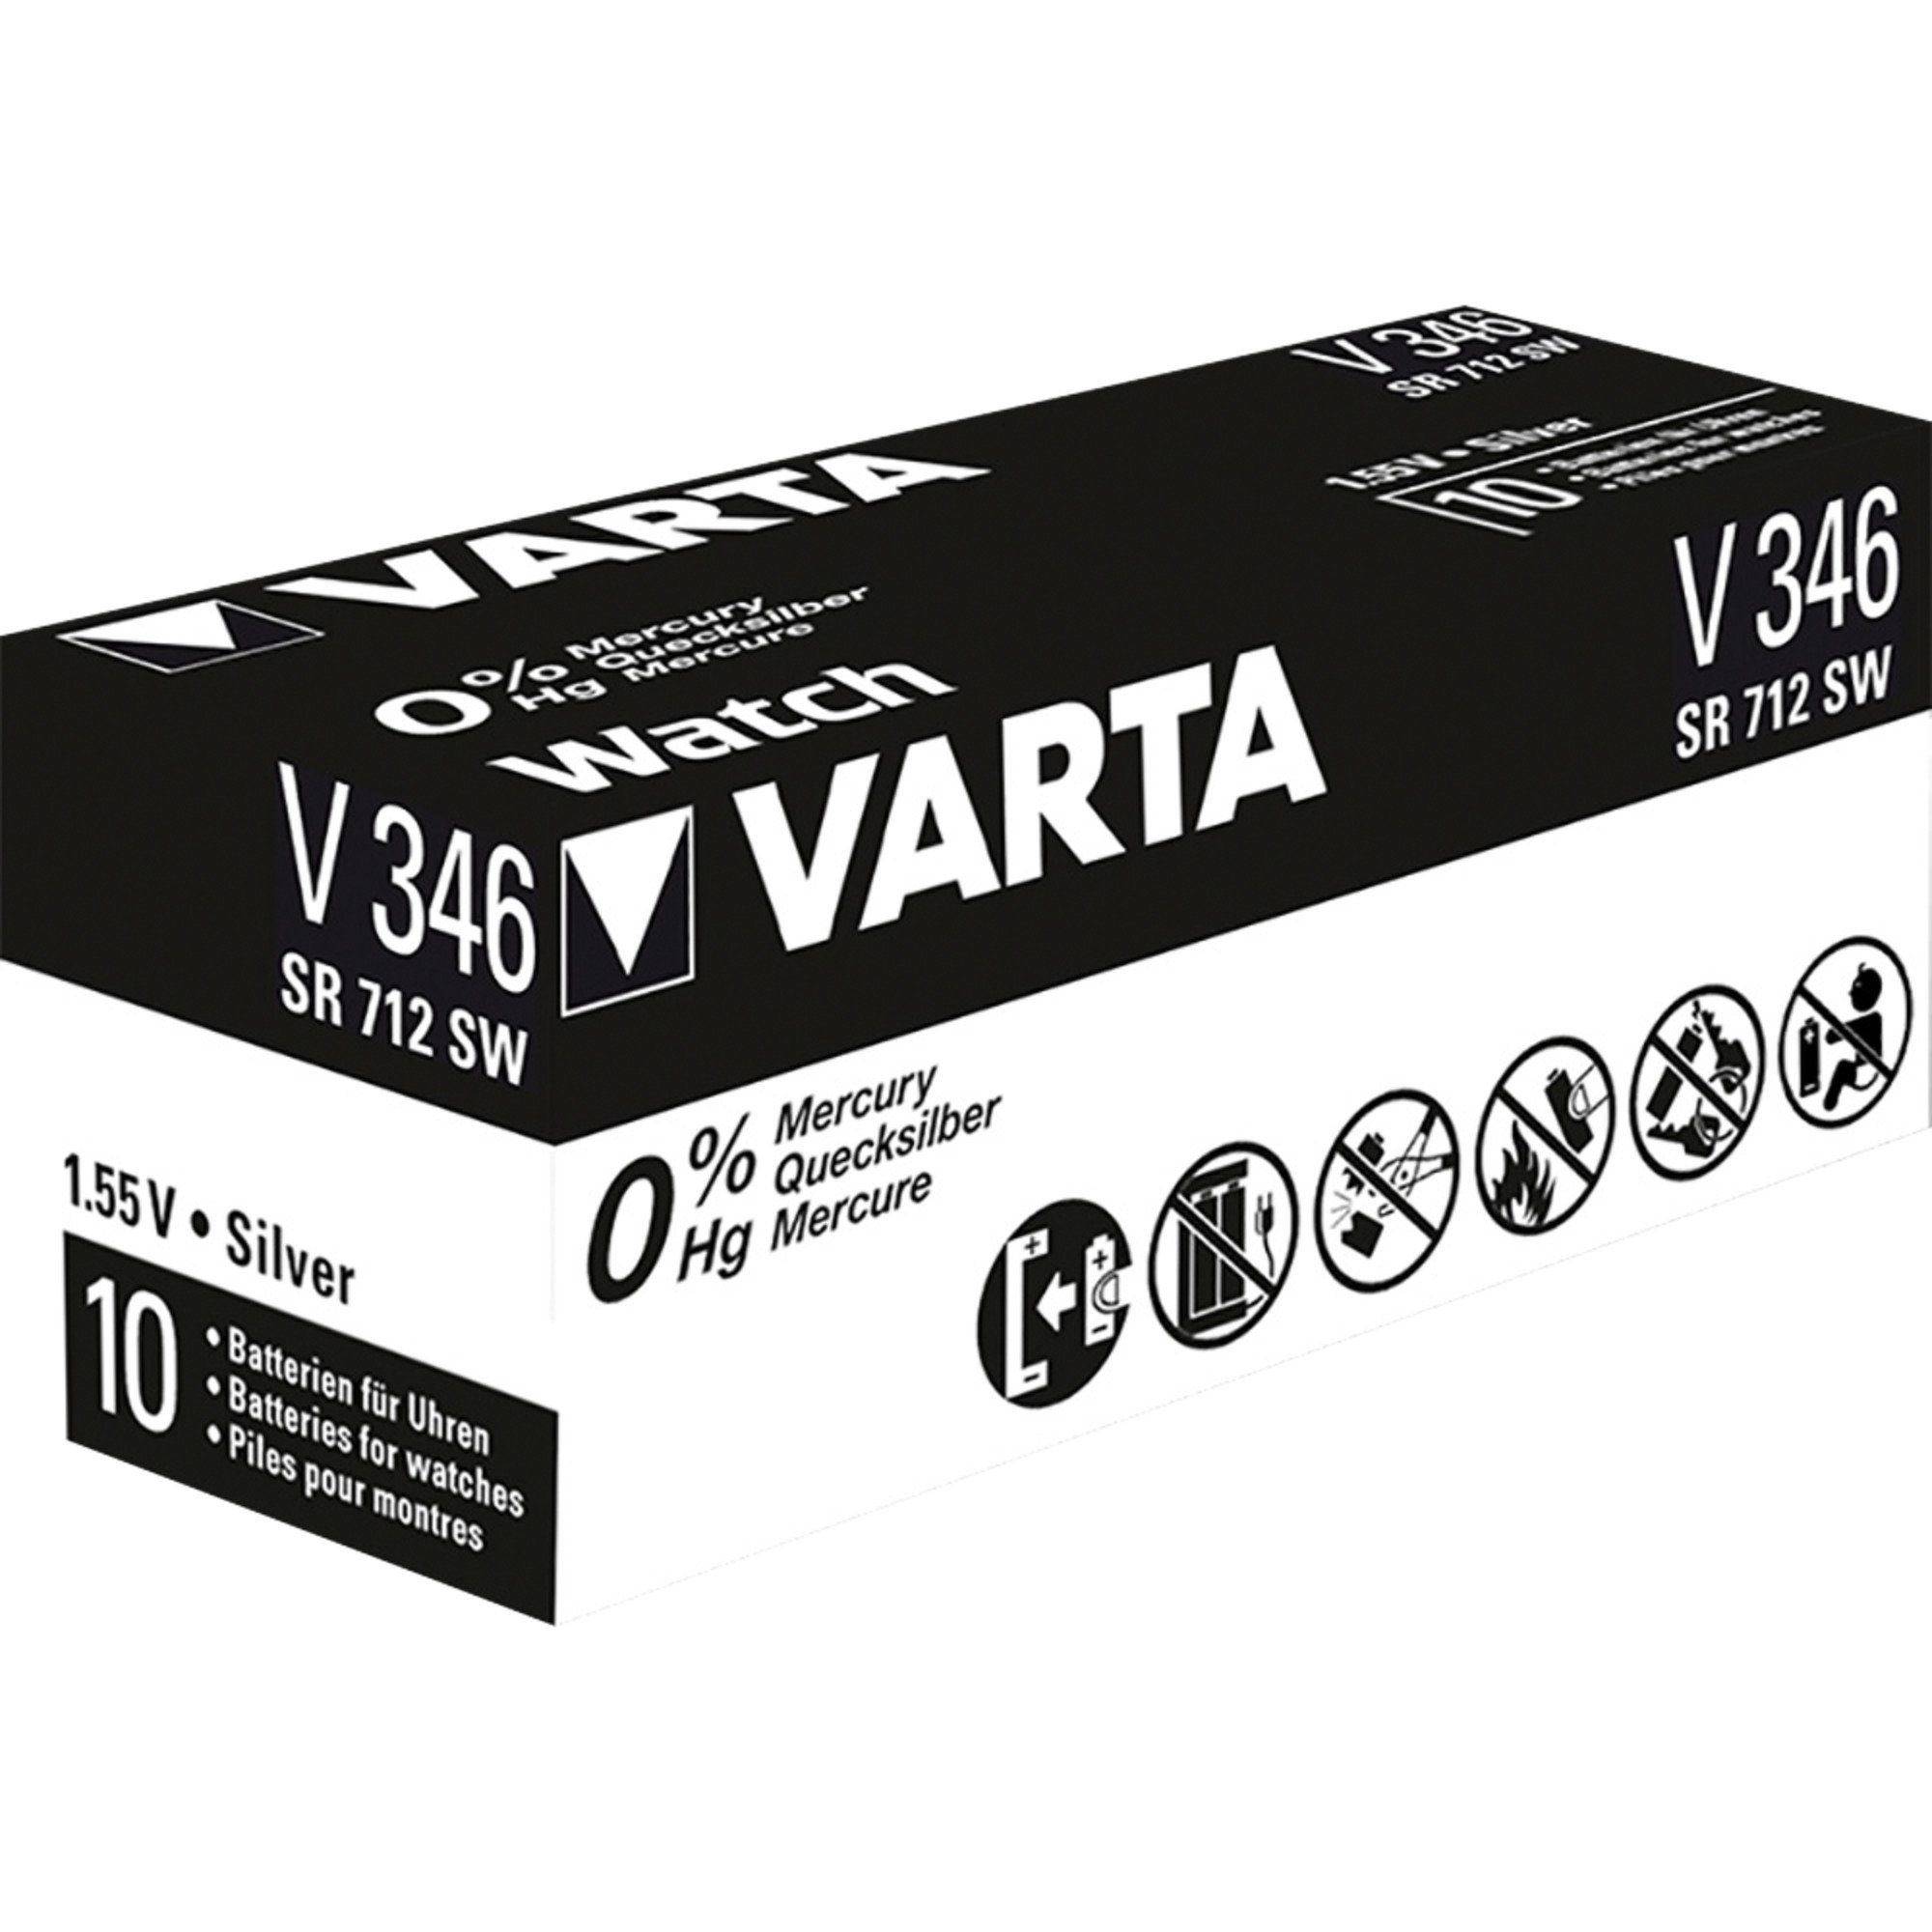 VARTA Varta V346 SR712, Batterie, (10 Stück, V346) Batterie